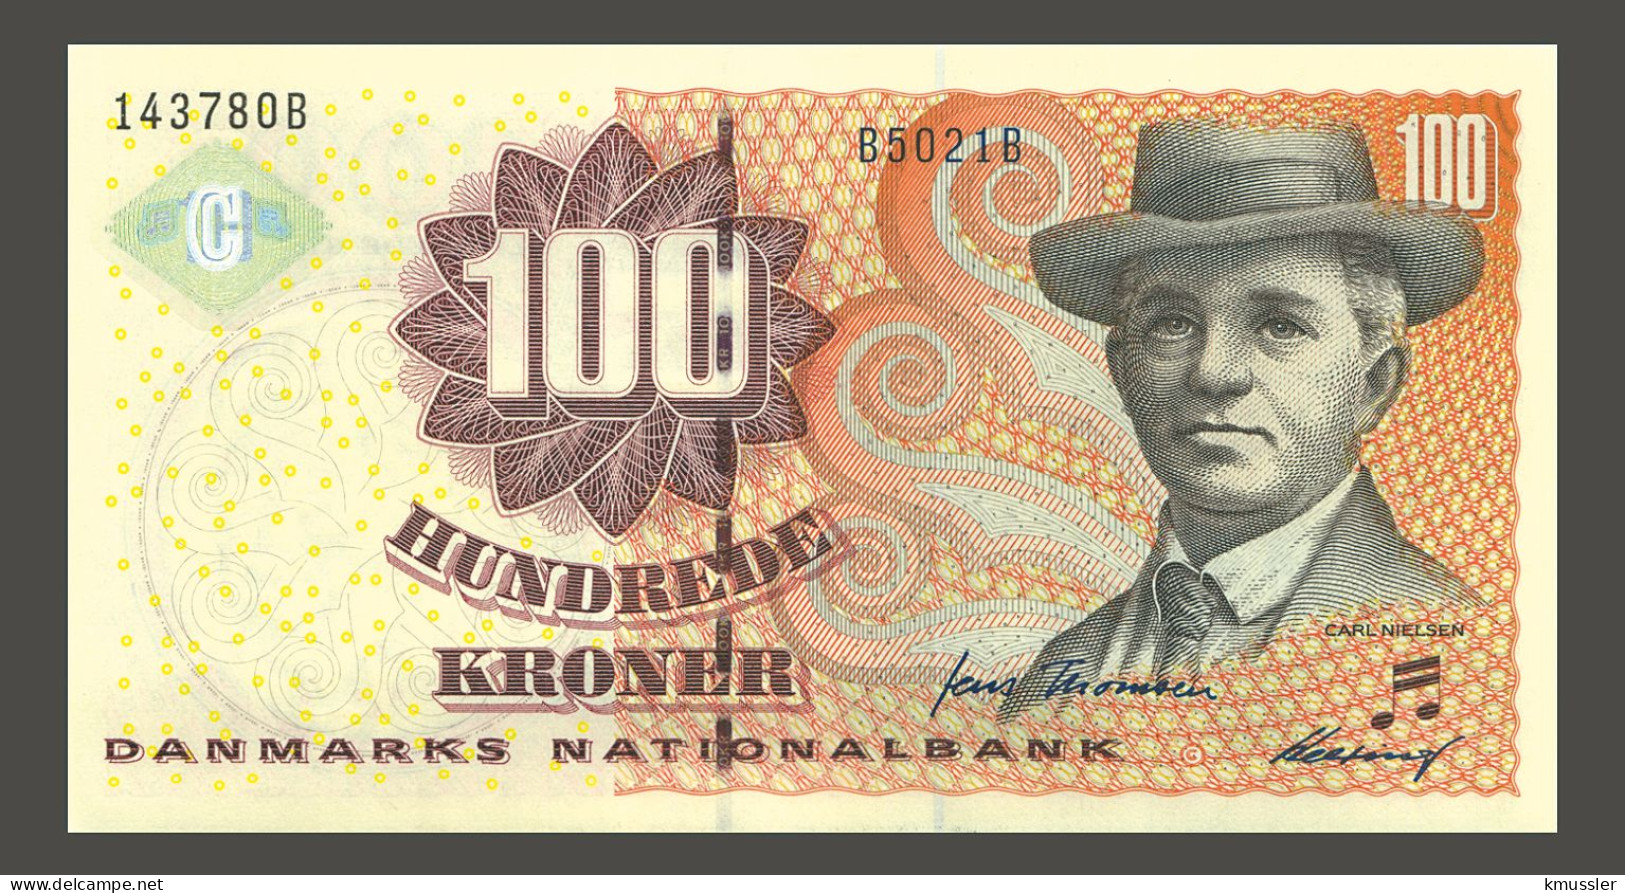 # # # Banknote Dänemark (Denmark) 100 Kroner 2002 (P-61) UNC # # # - Denmark